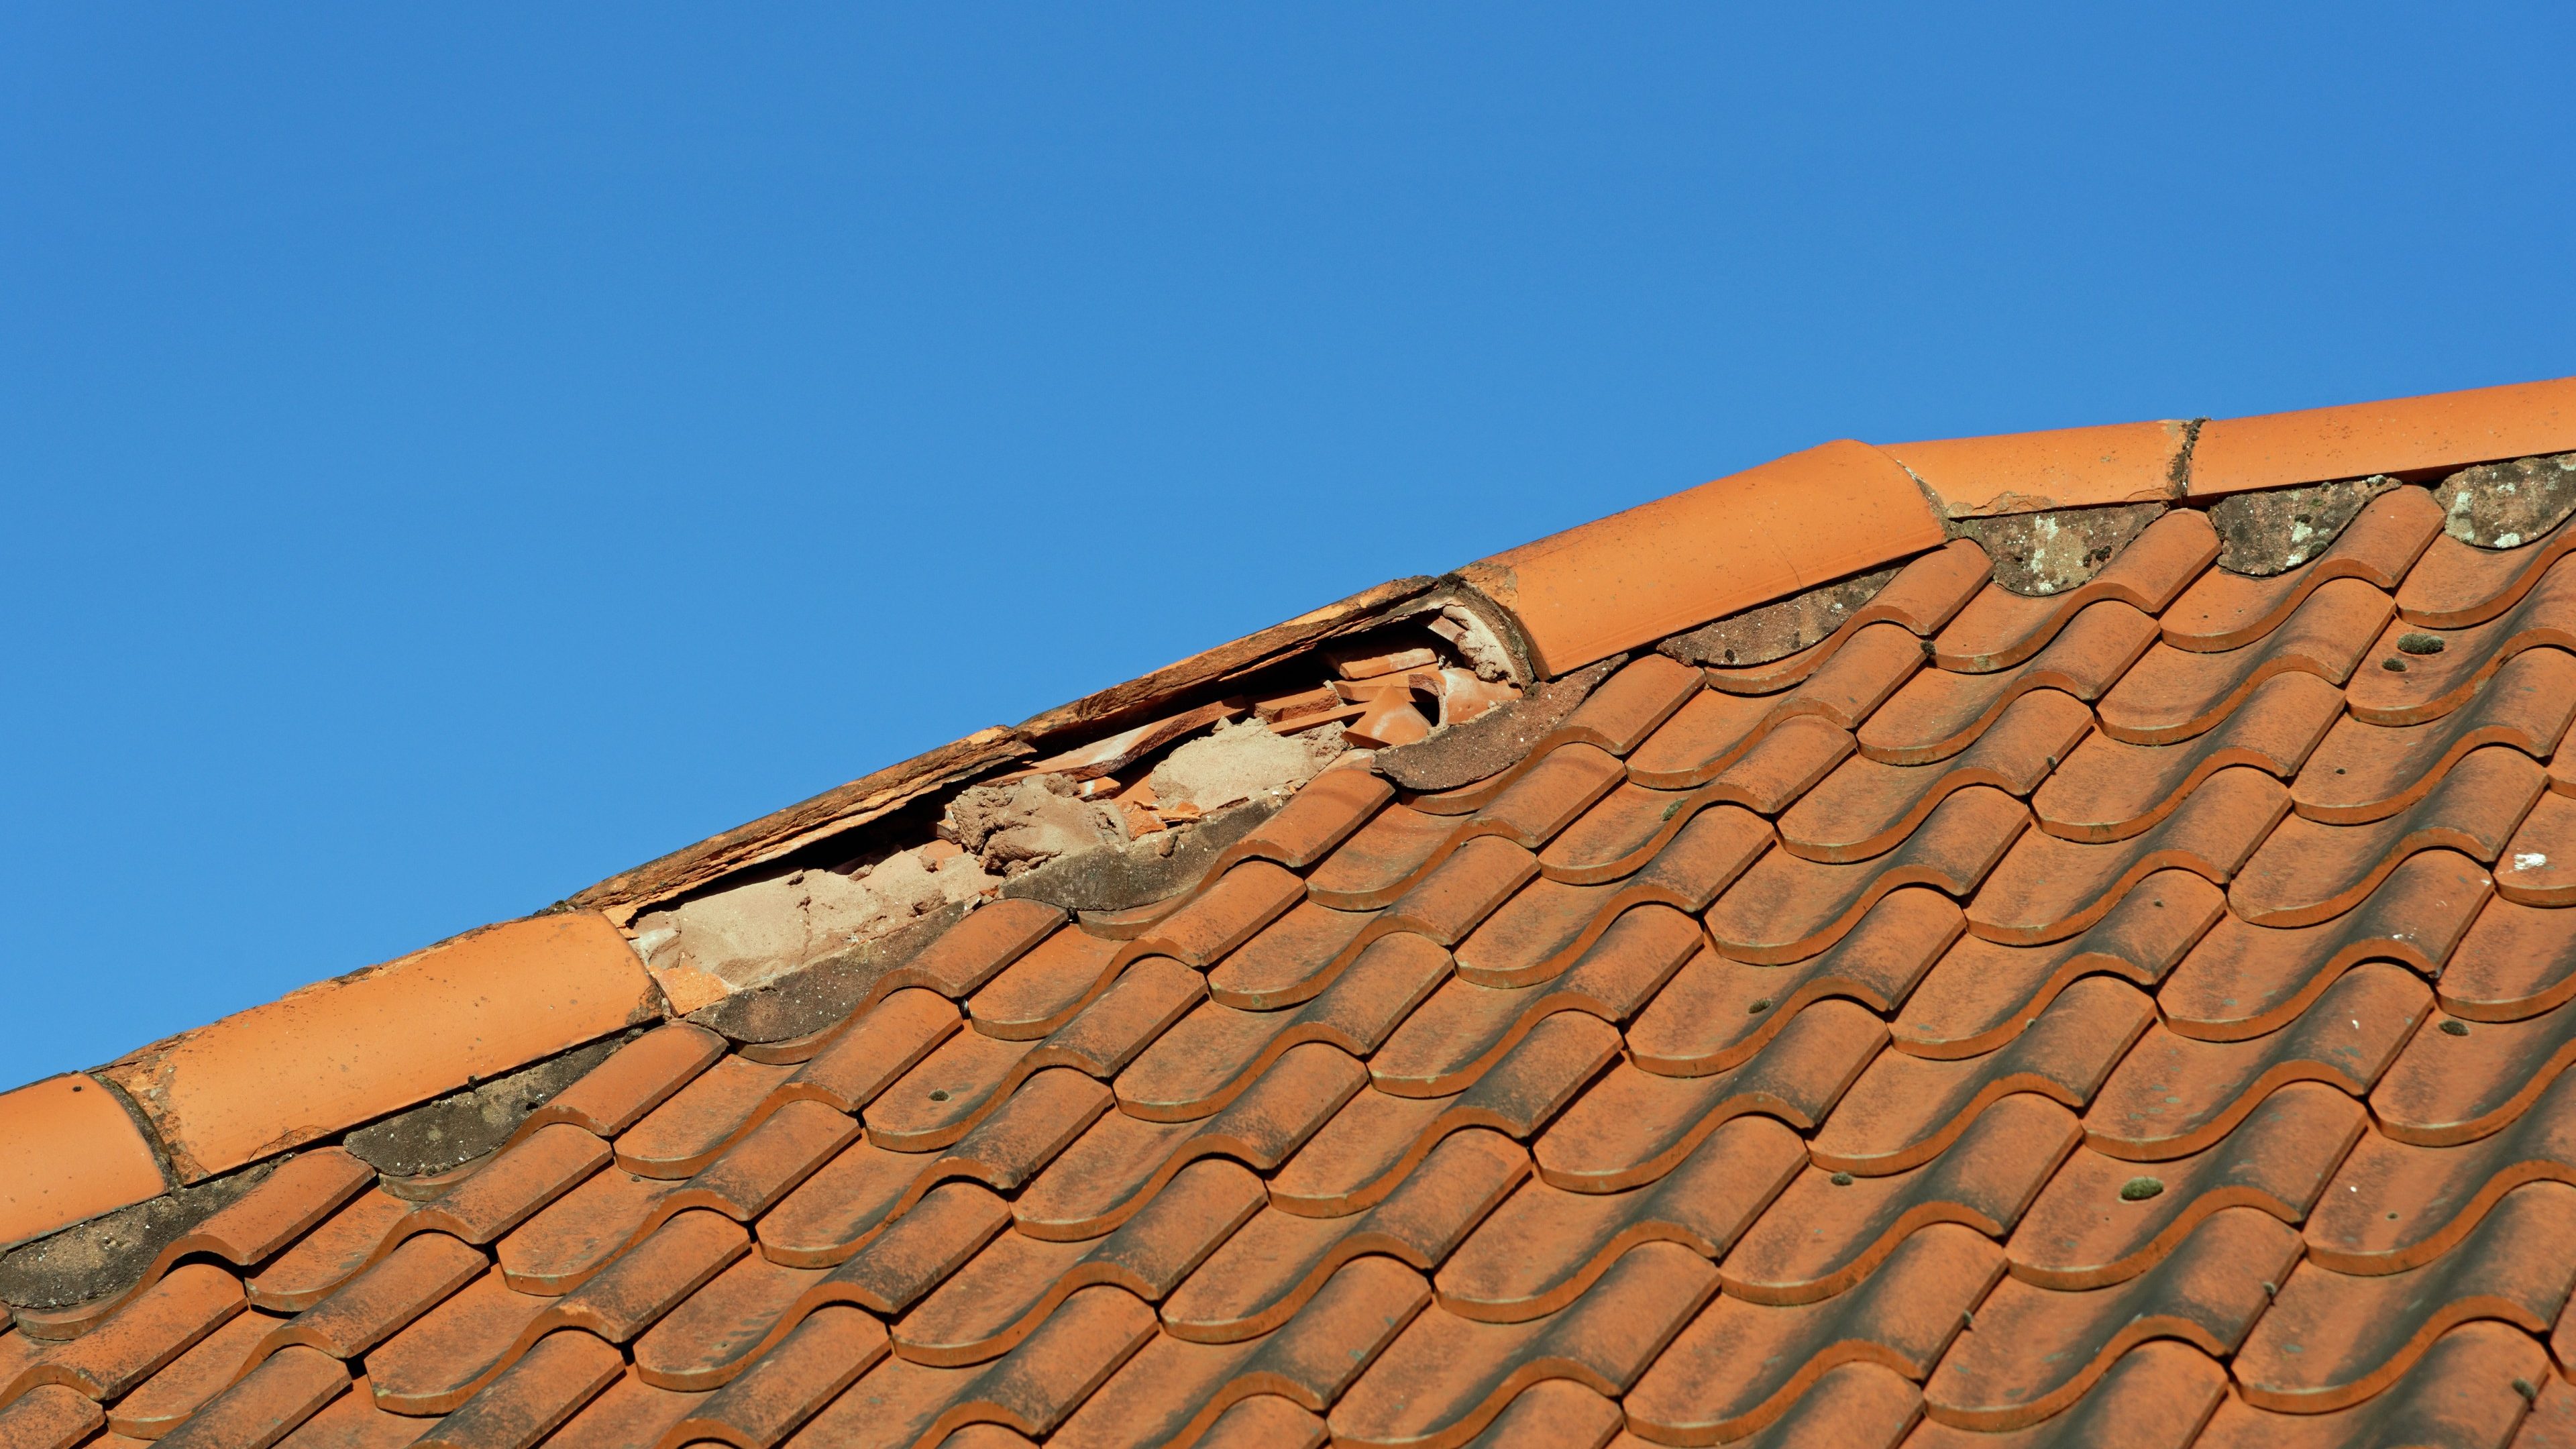 Damaged broken ridge roof tiles against a blue sky